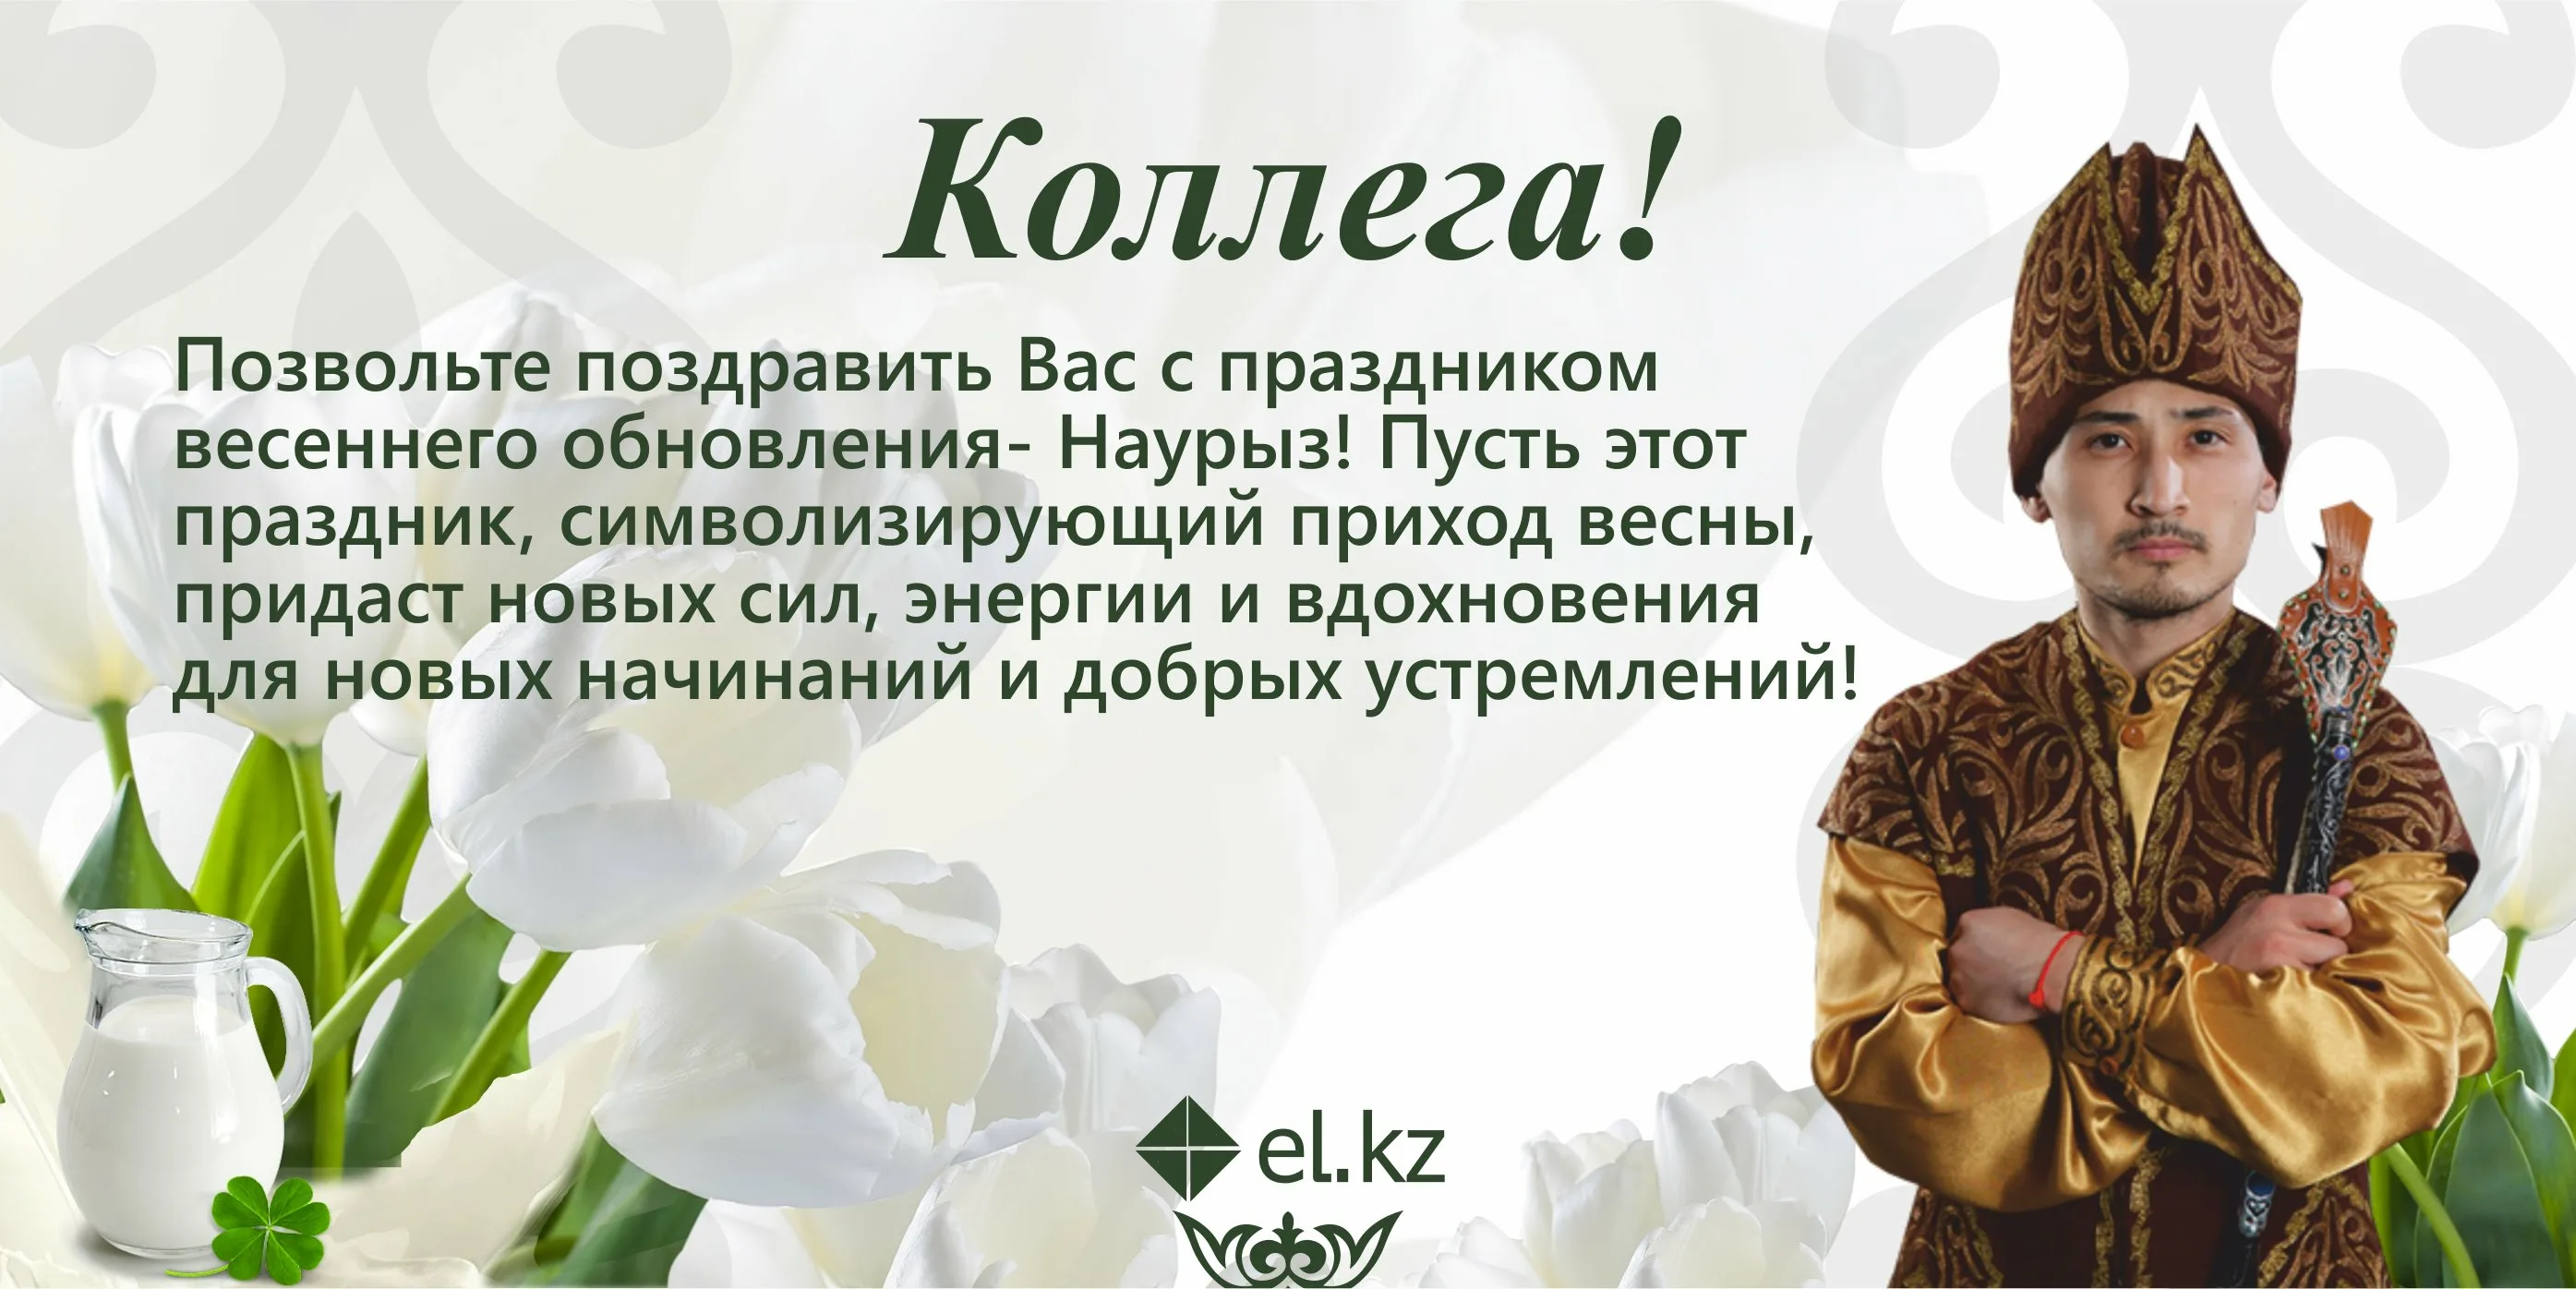 Поздравить с наурызом картинки. Наурыз поздравление. Поздравление на казахском. Поздравление с Наурызом на казахском. Наурыз открытки с поздравлениями на казахском языке.